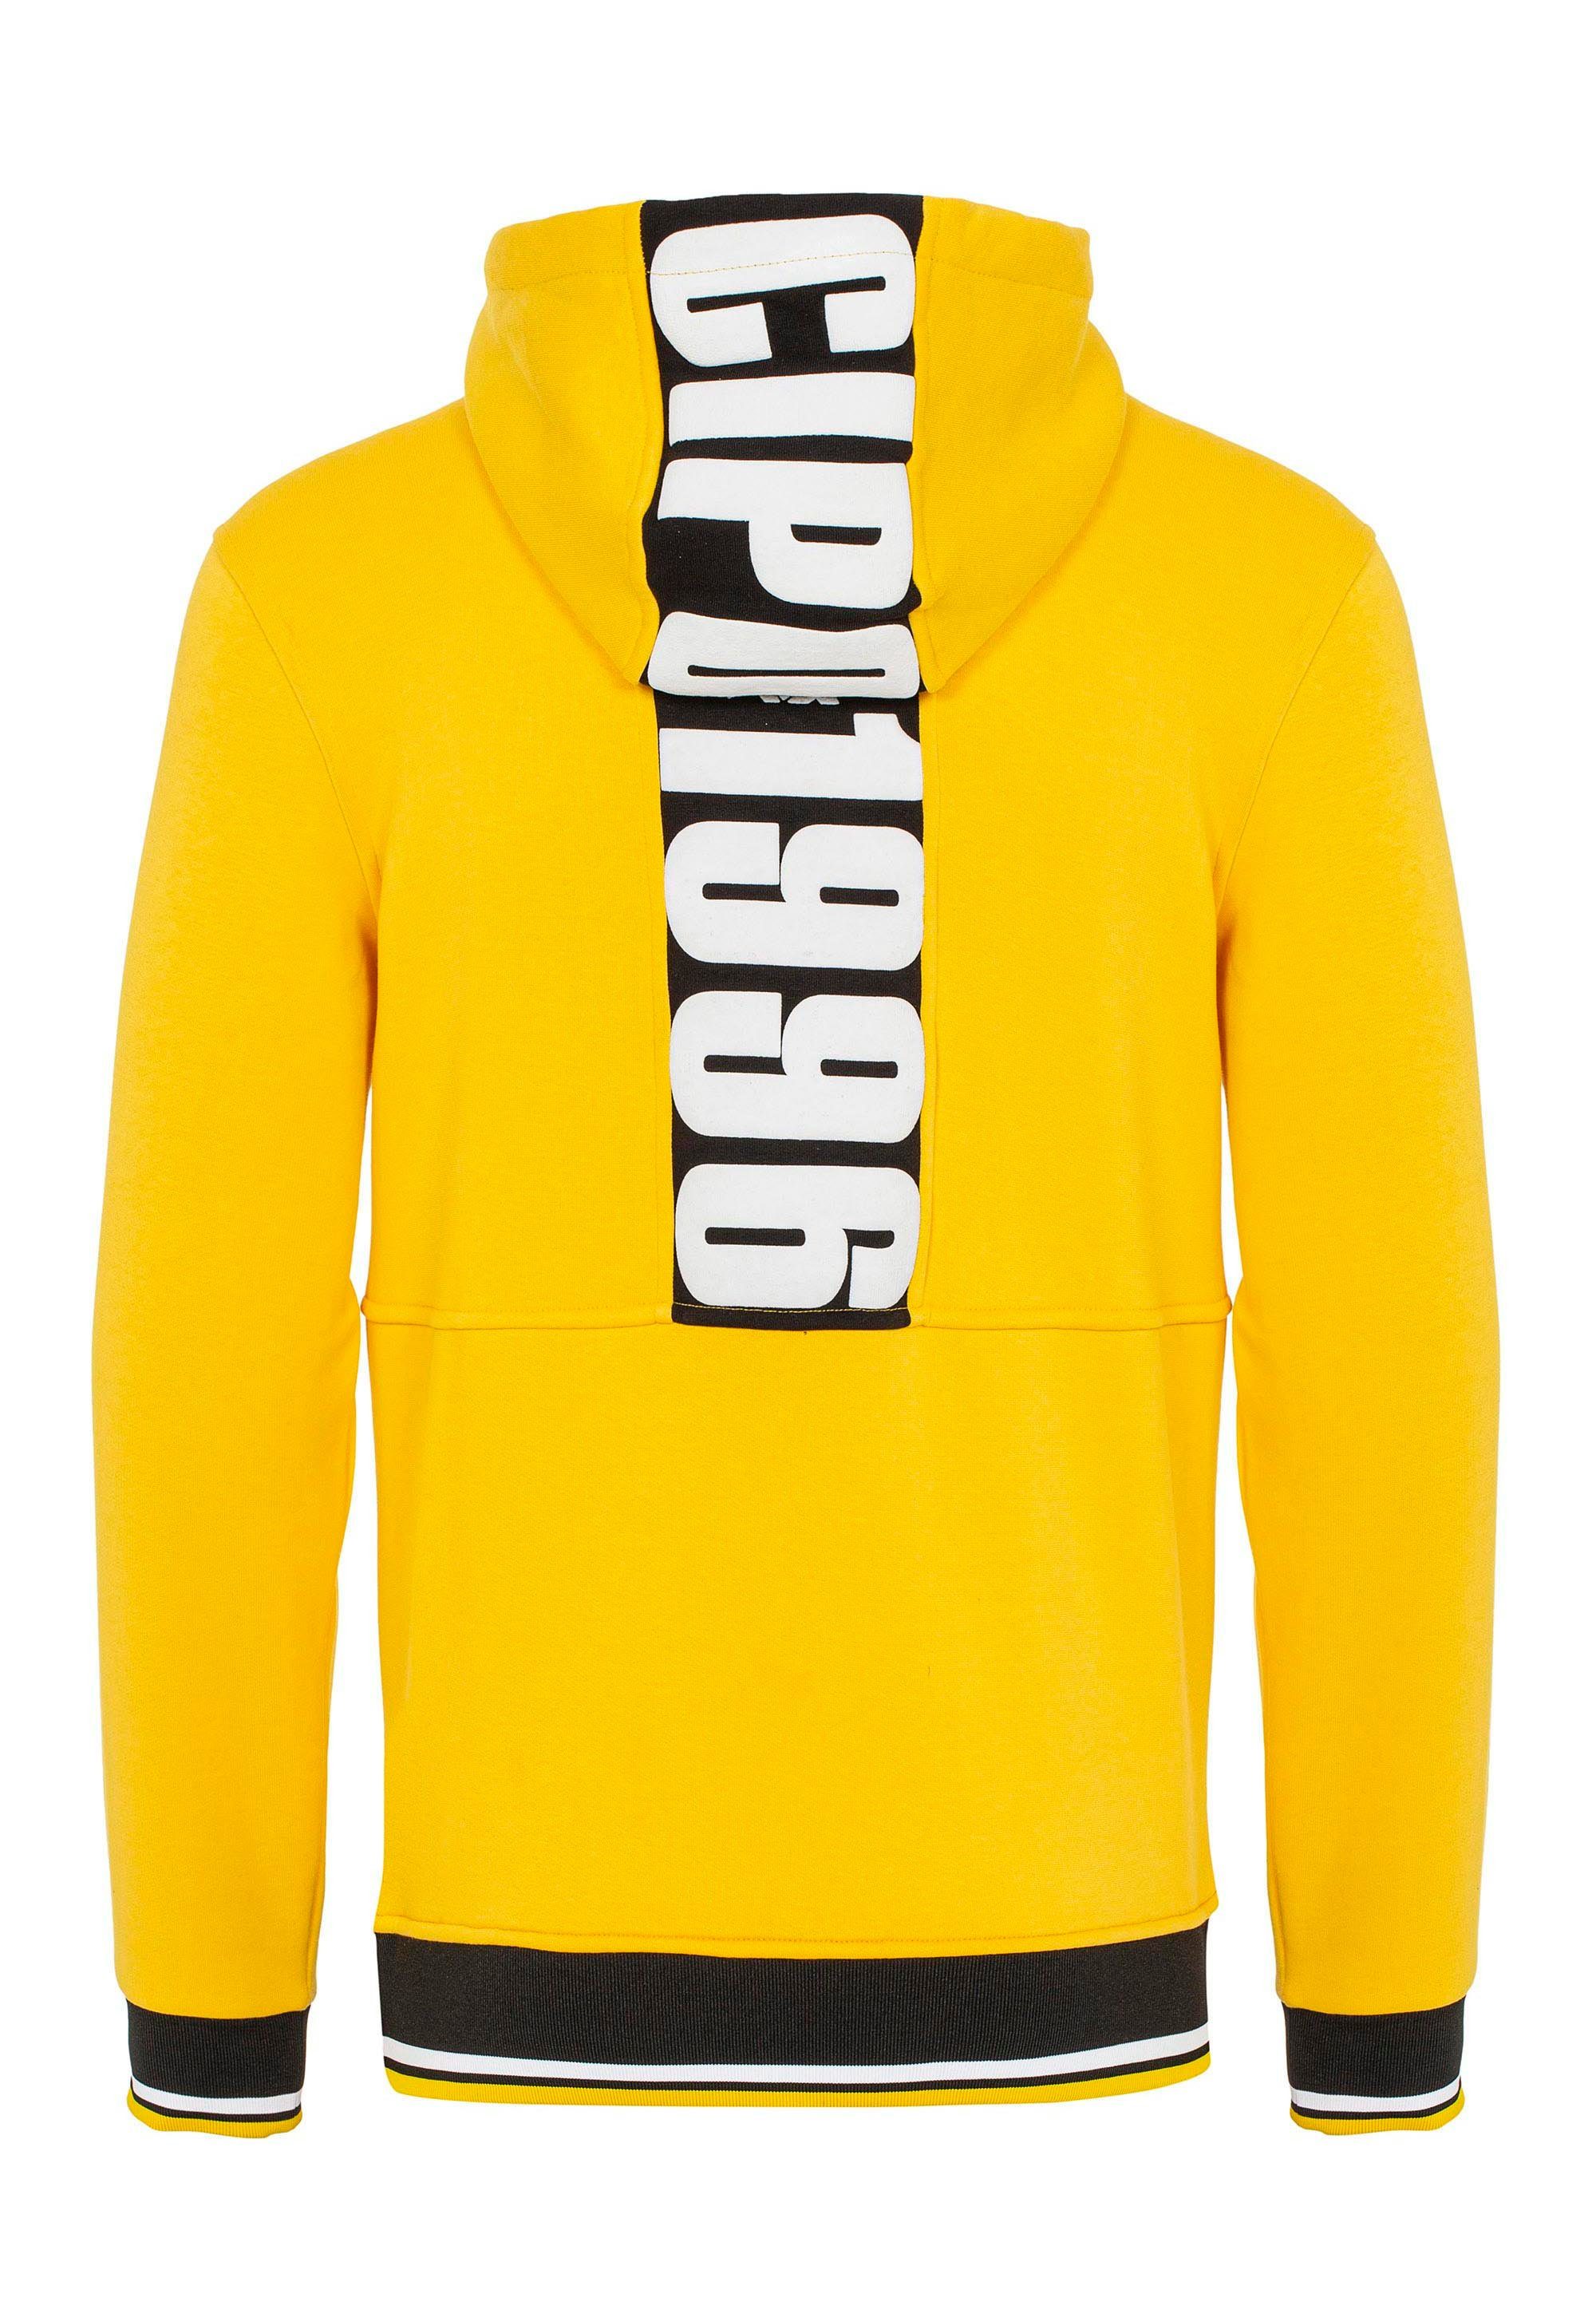 Markenprints gelb Kapuzensweatshirt mit & tollen Baxx Cipo